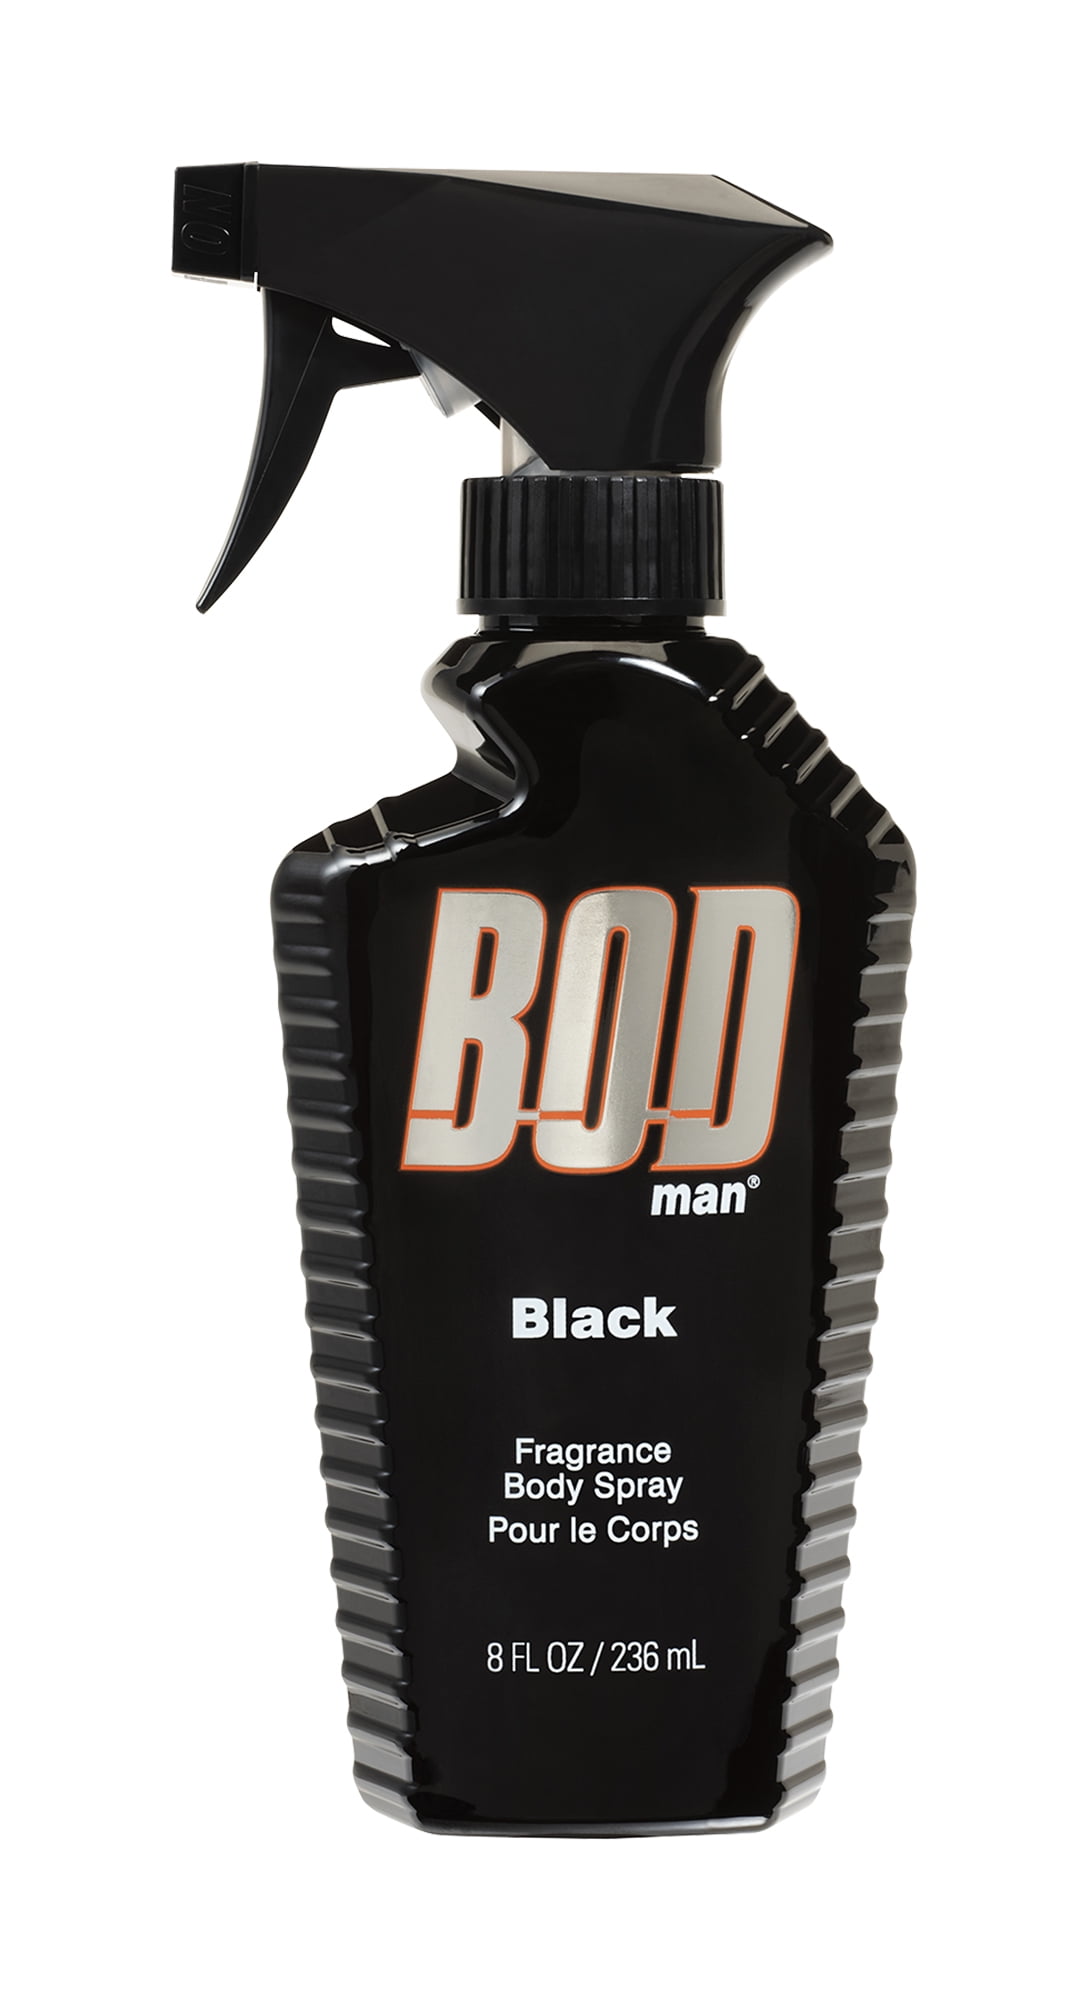 BOD man Fragrance Body Spray, Black, 8 fl oz